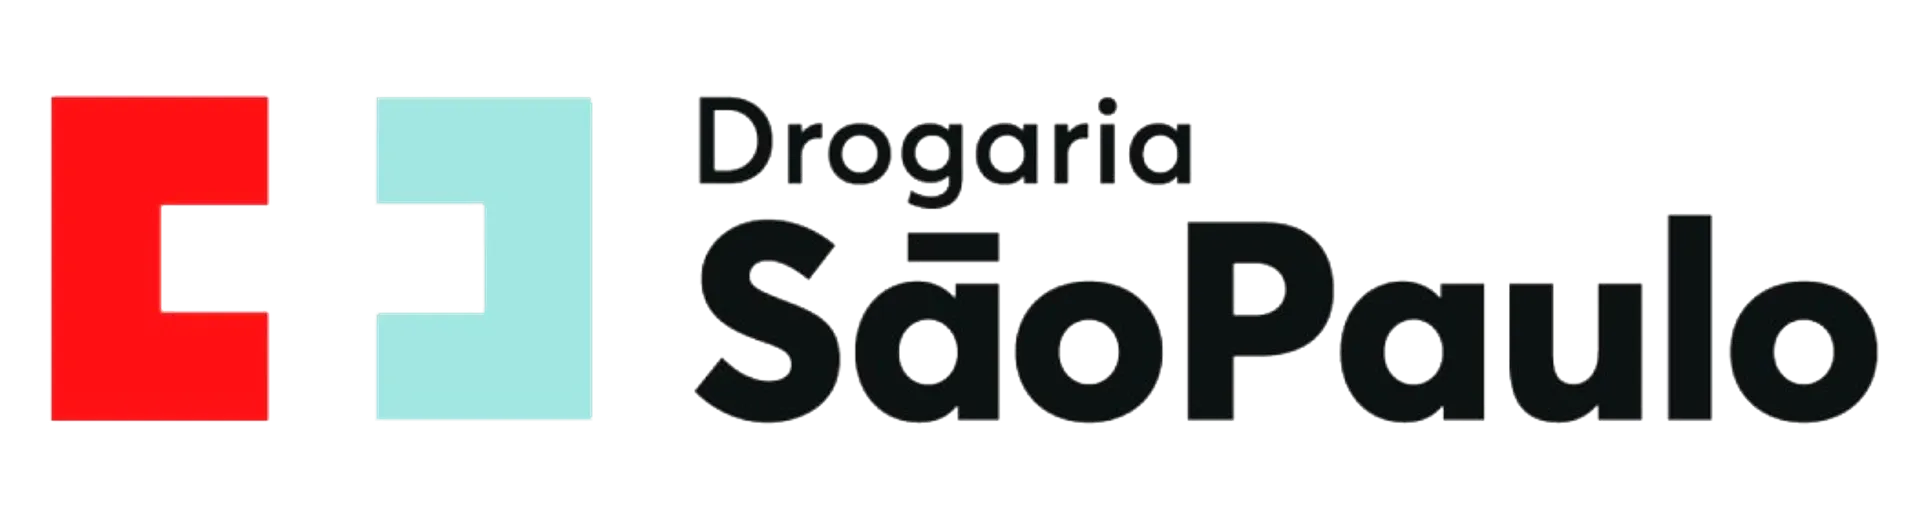 DROGARIA SAO PAULO logo